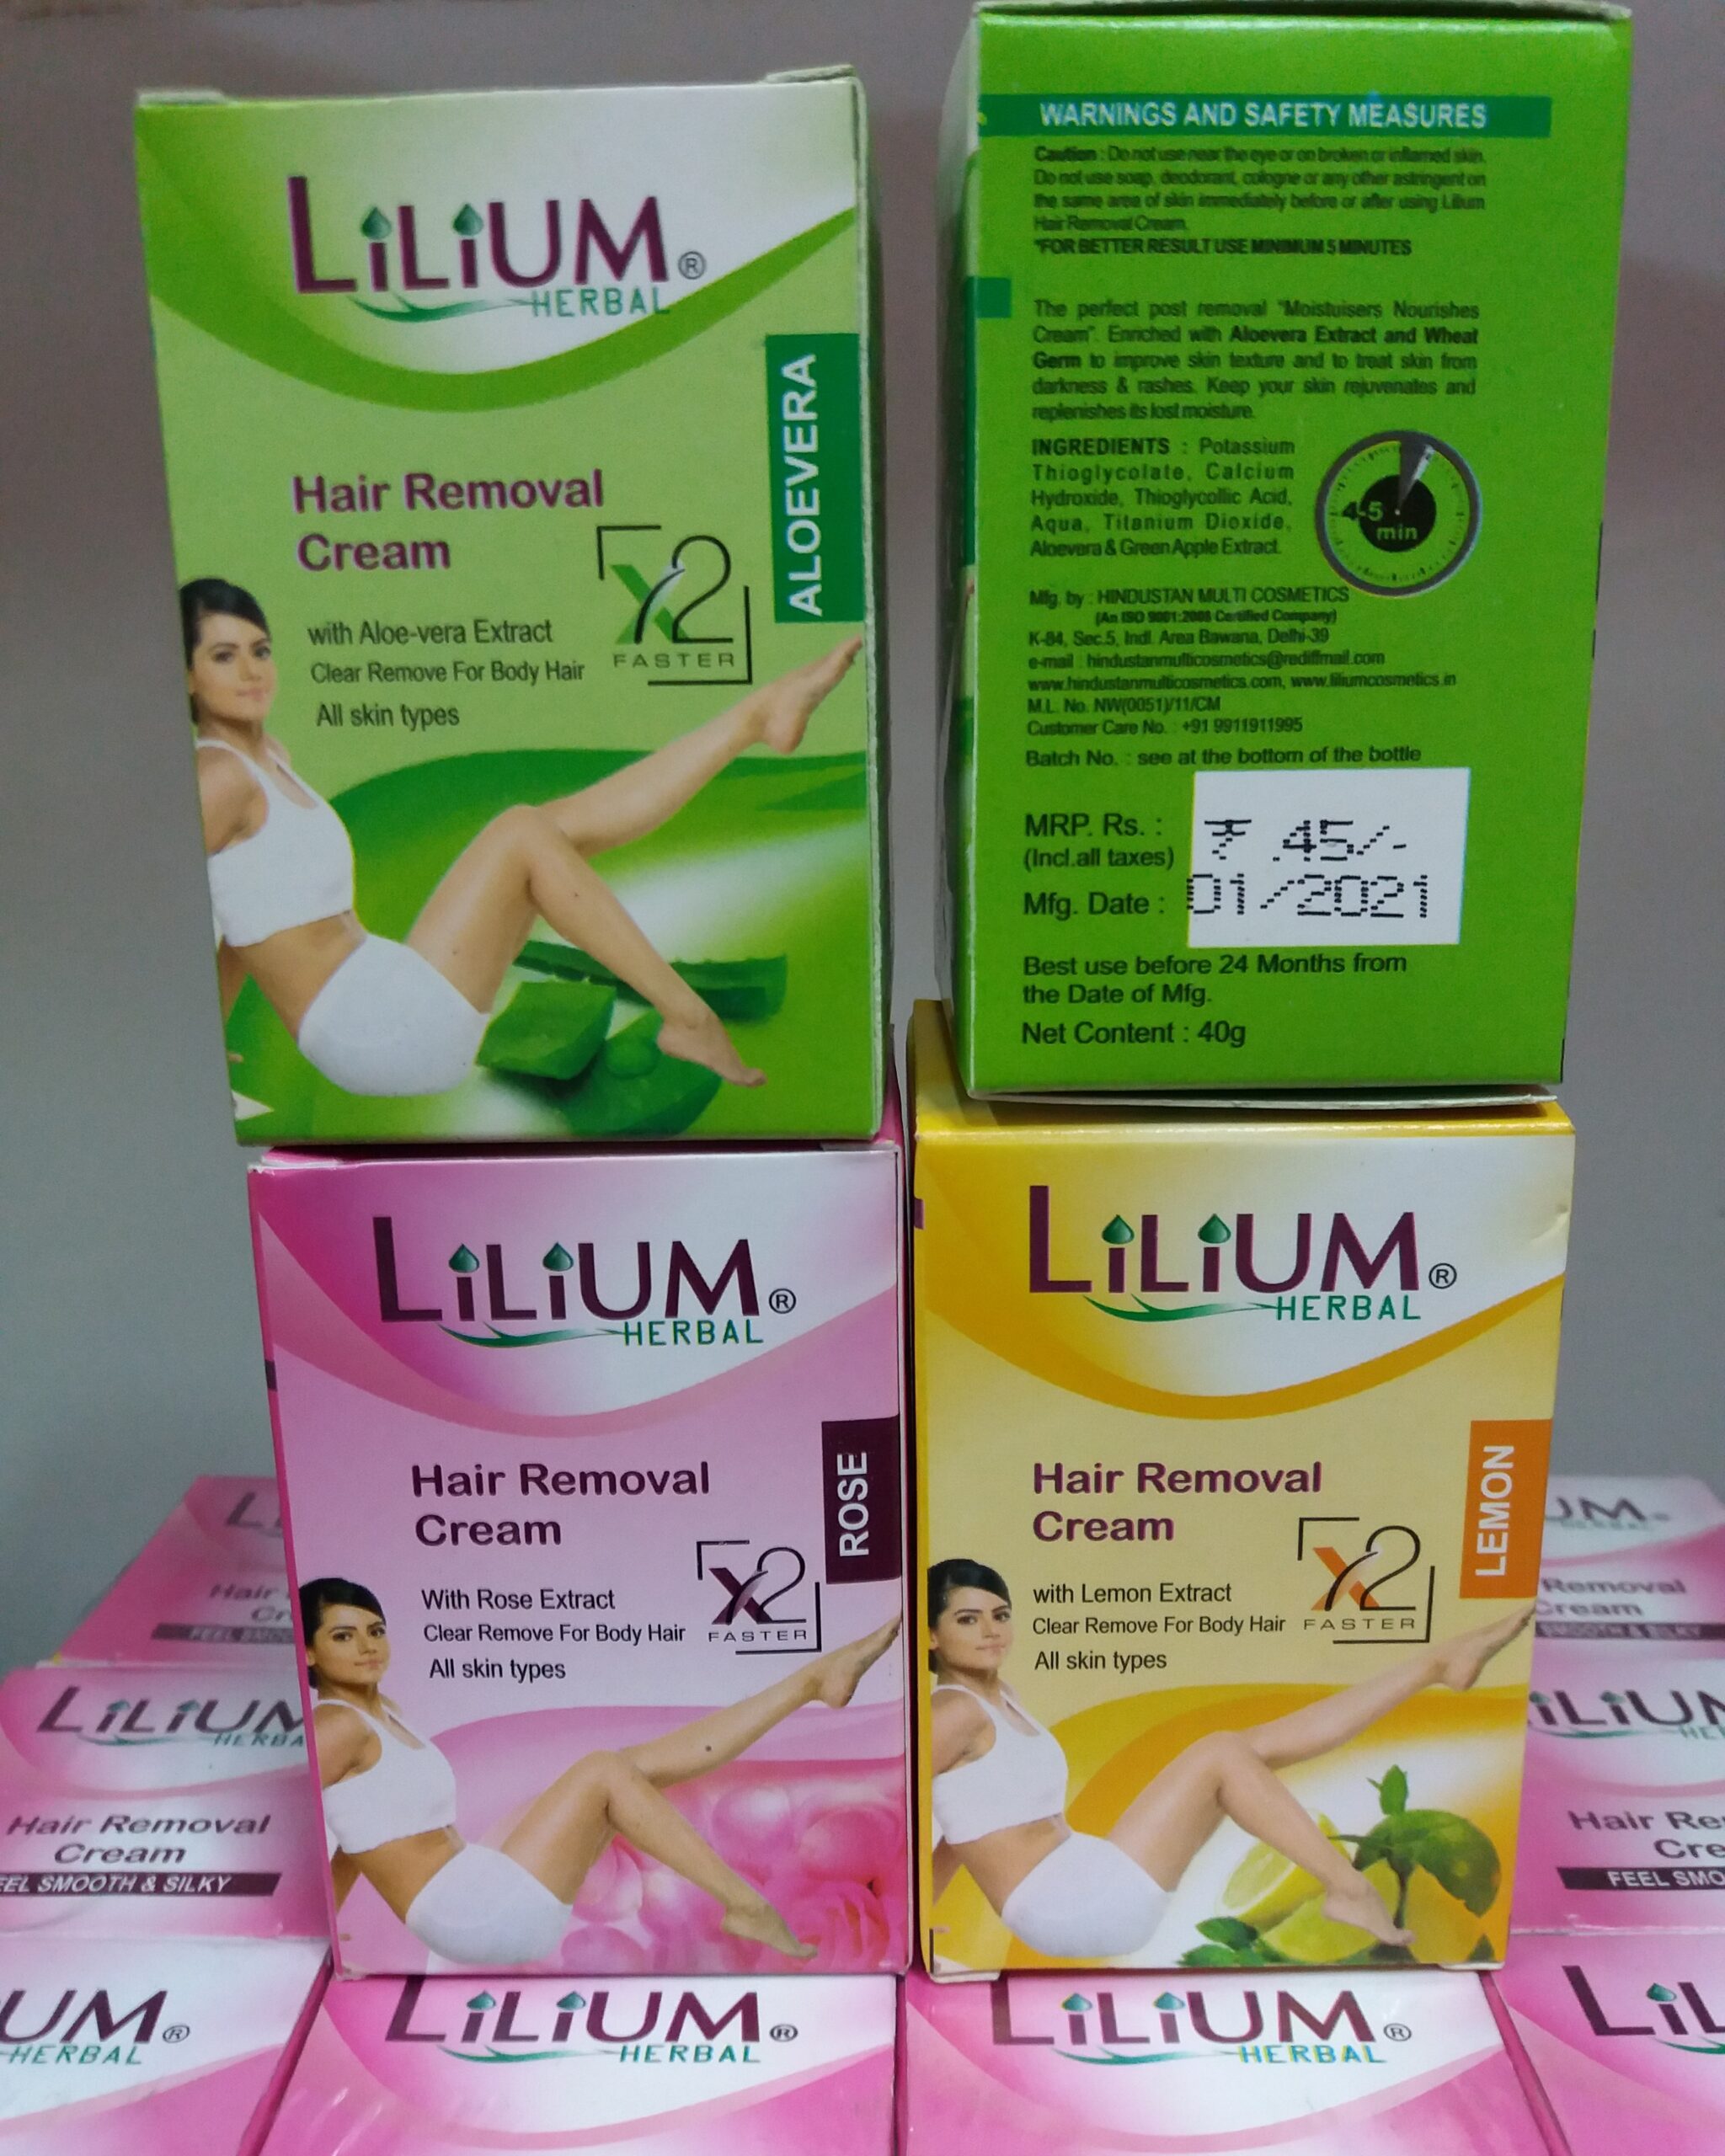 Lilium herbal hair removal cream 40g. Th – NAJA NAJA